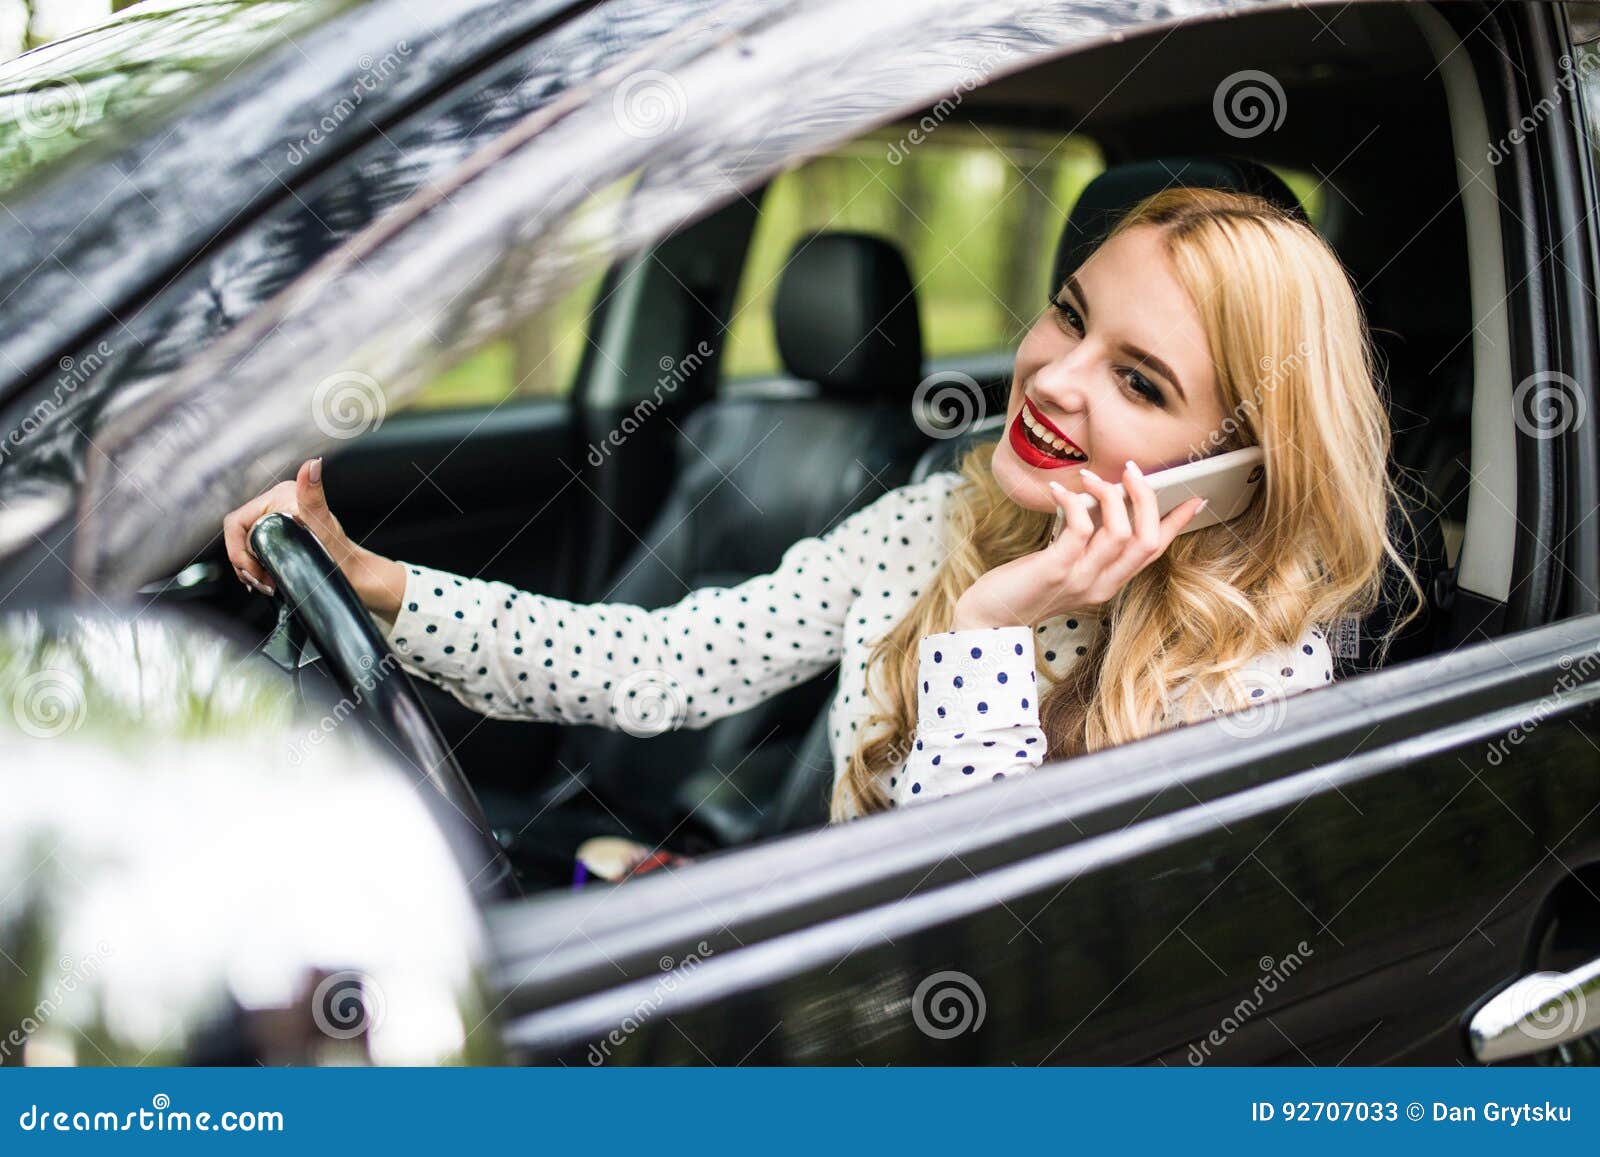 https://thumbs.dreamstime.com/z/young-beautiful-woman-calling-phone-driving-car-street-92707033.jpg